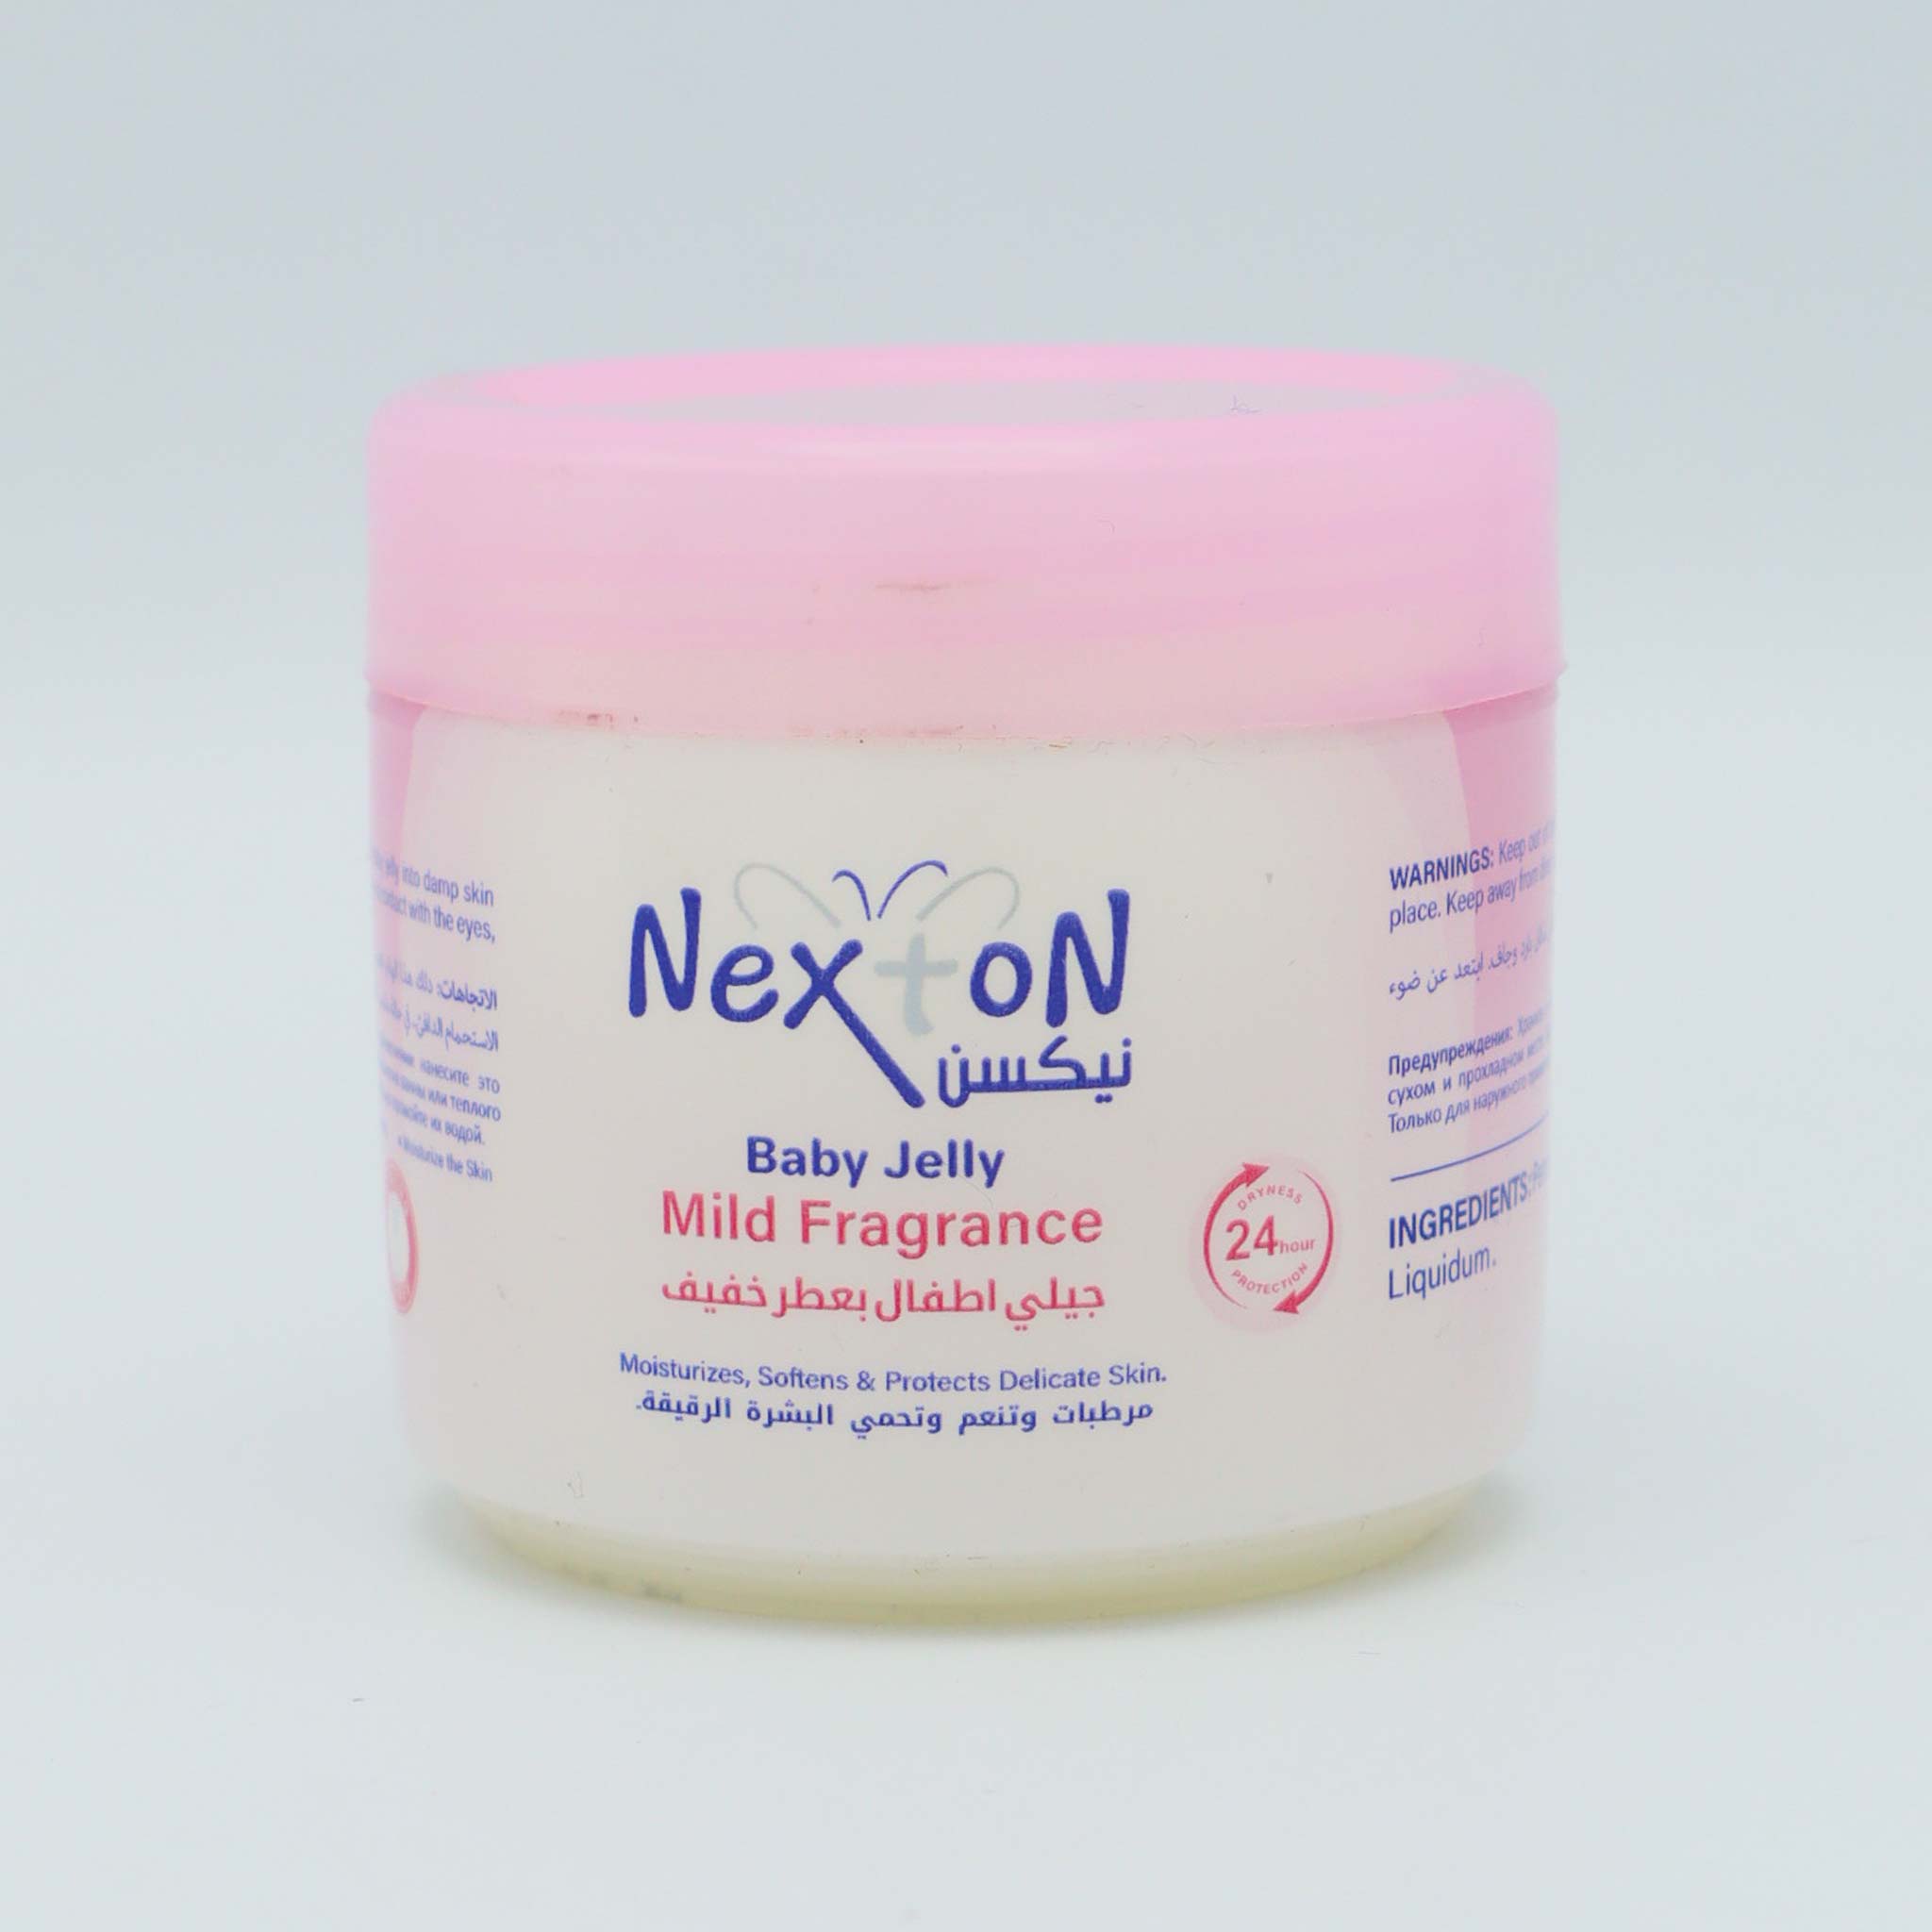 Baby Jelly Mild Fragrance 100ml by Nexton